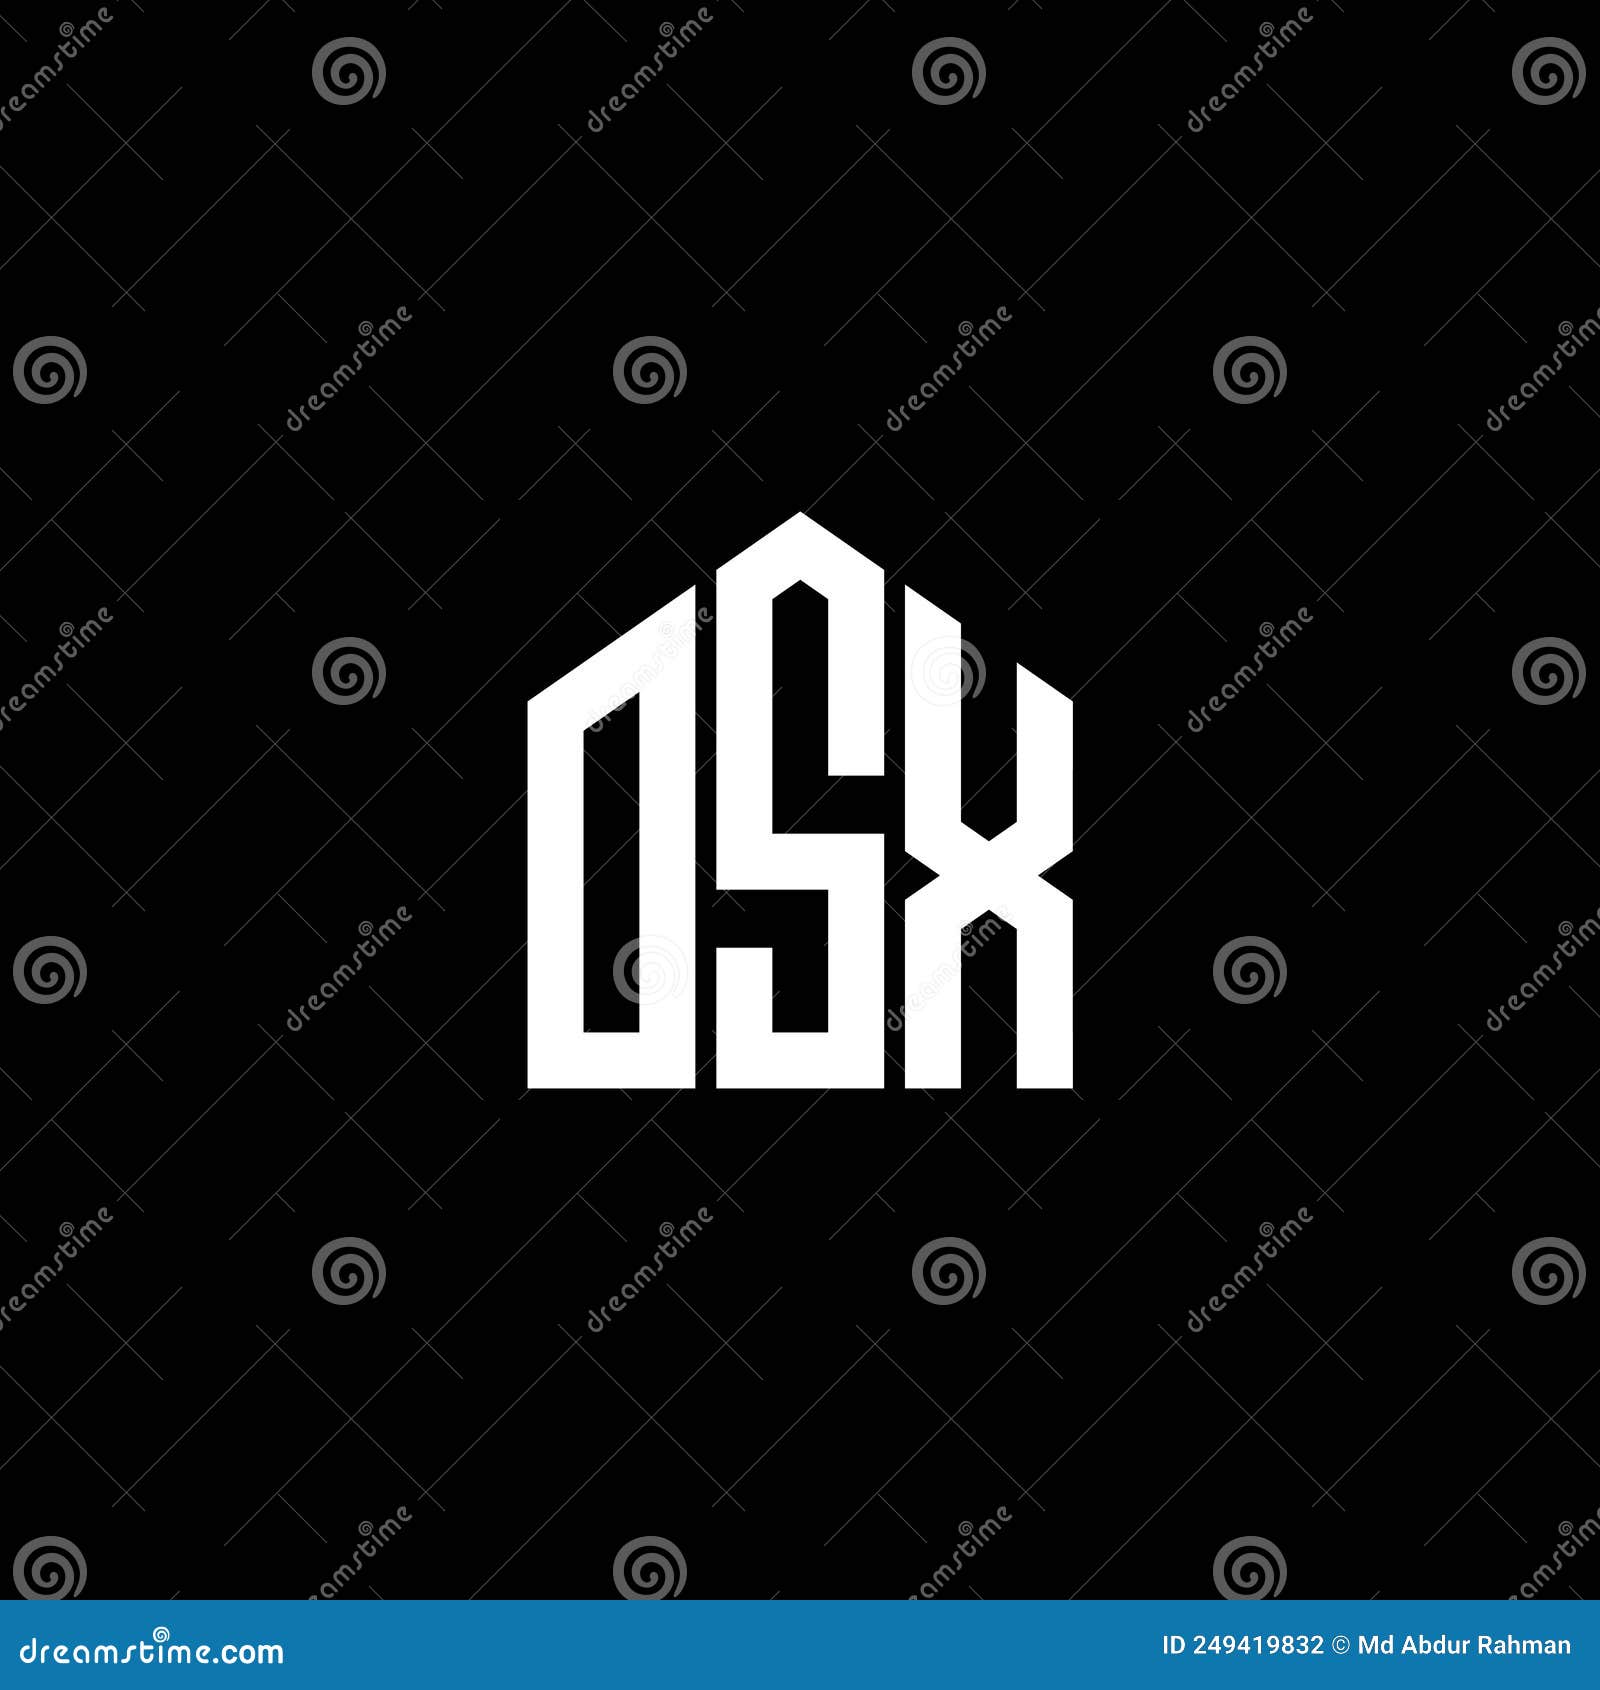 osx letter logo  on black background. osx creative initials letter logo concept. osx letter 